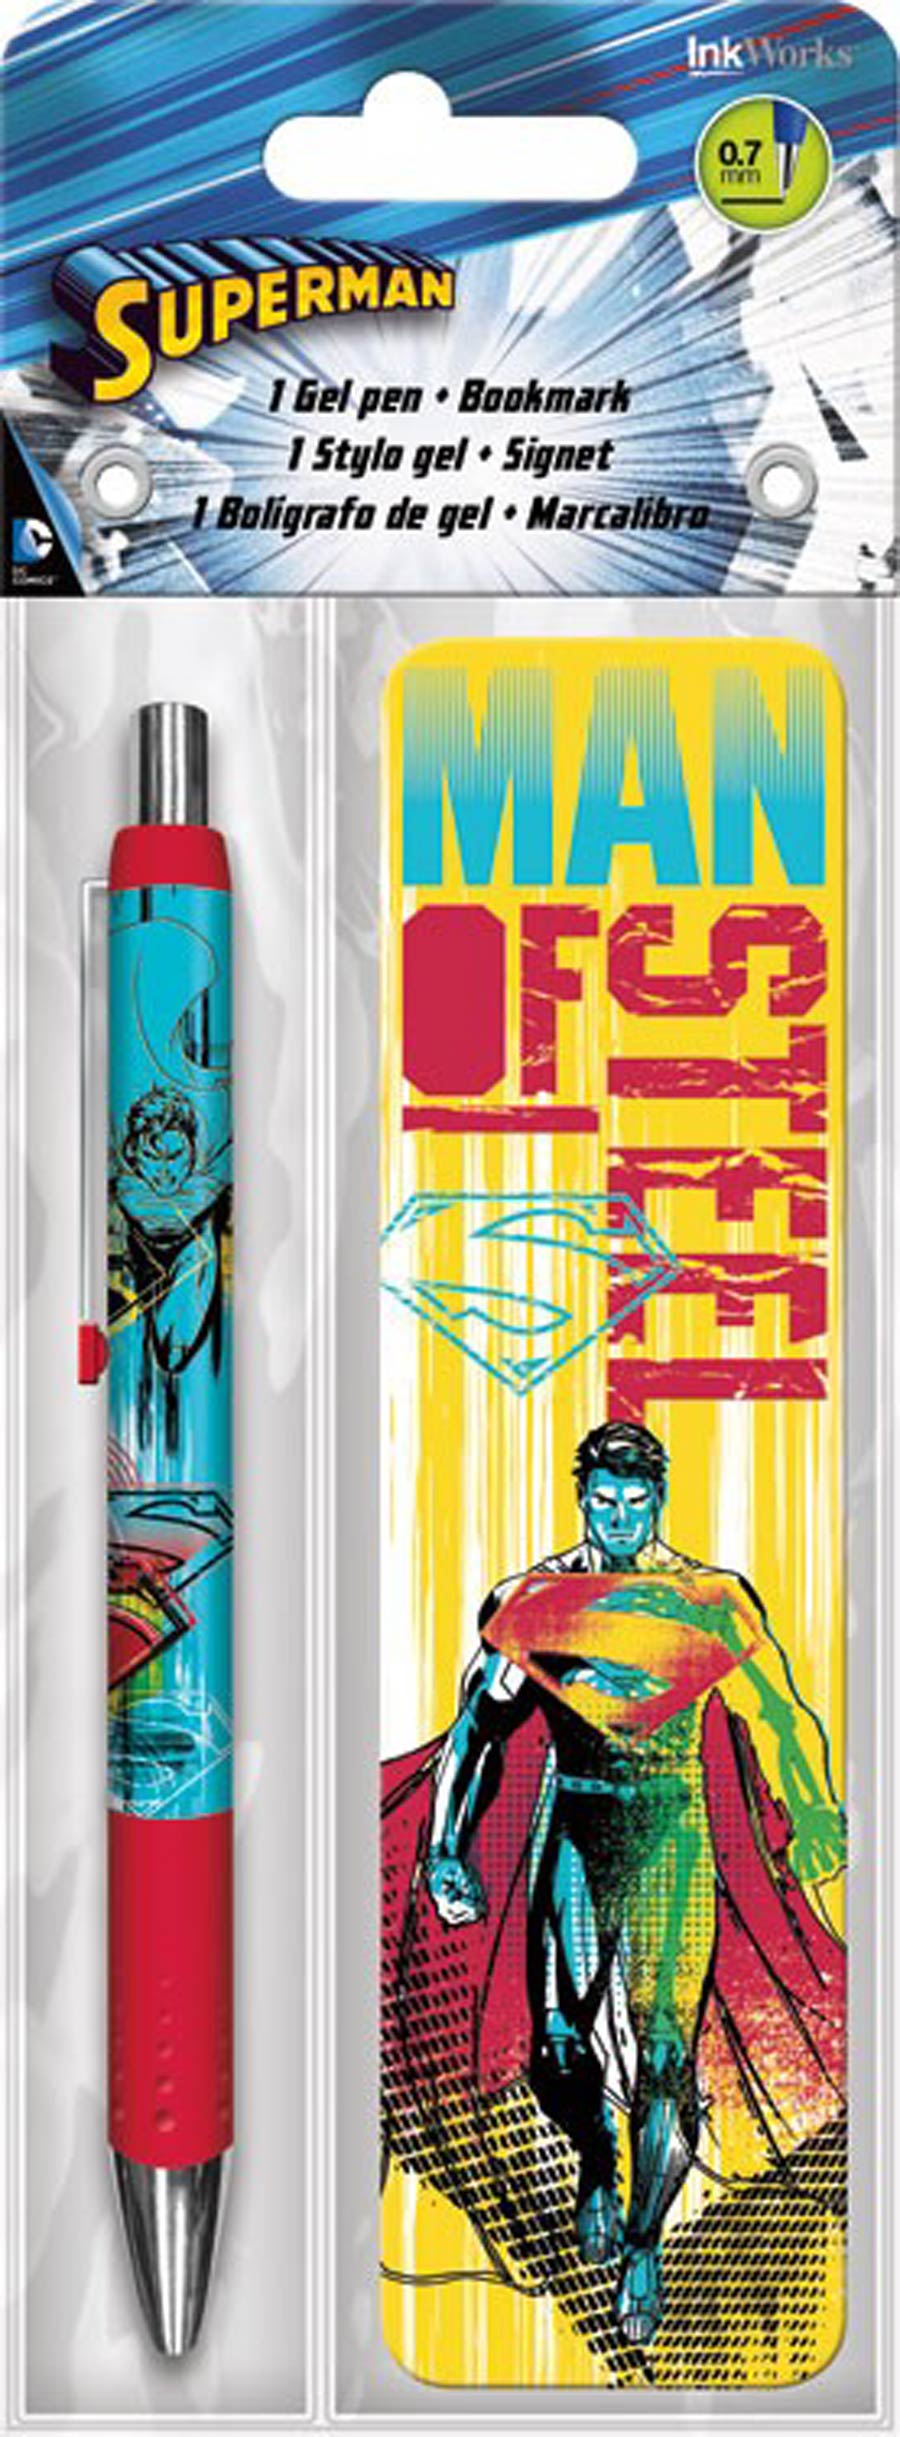 Superman Gel Pen And Bookmark